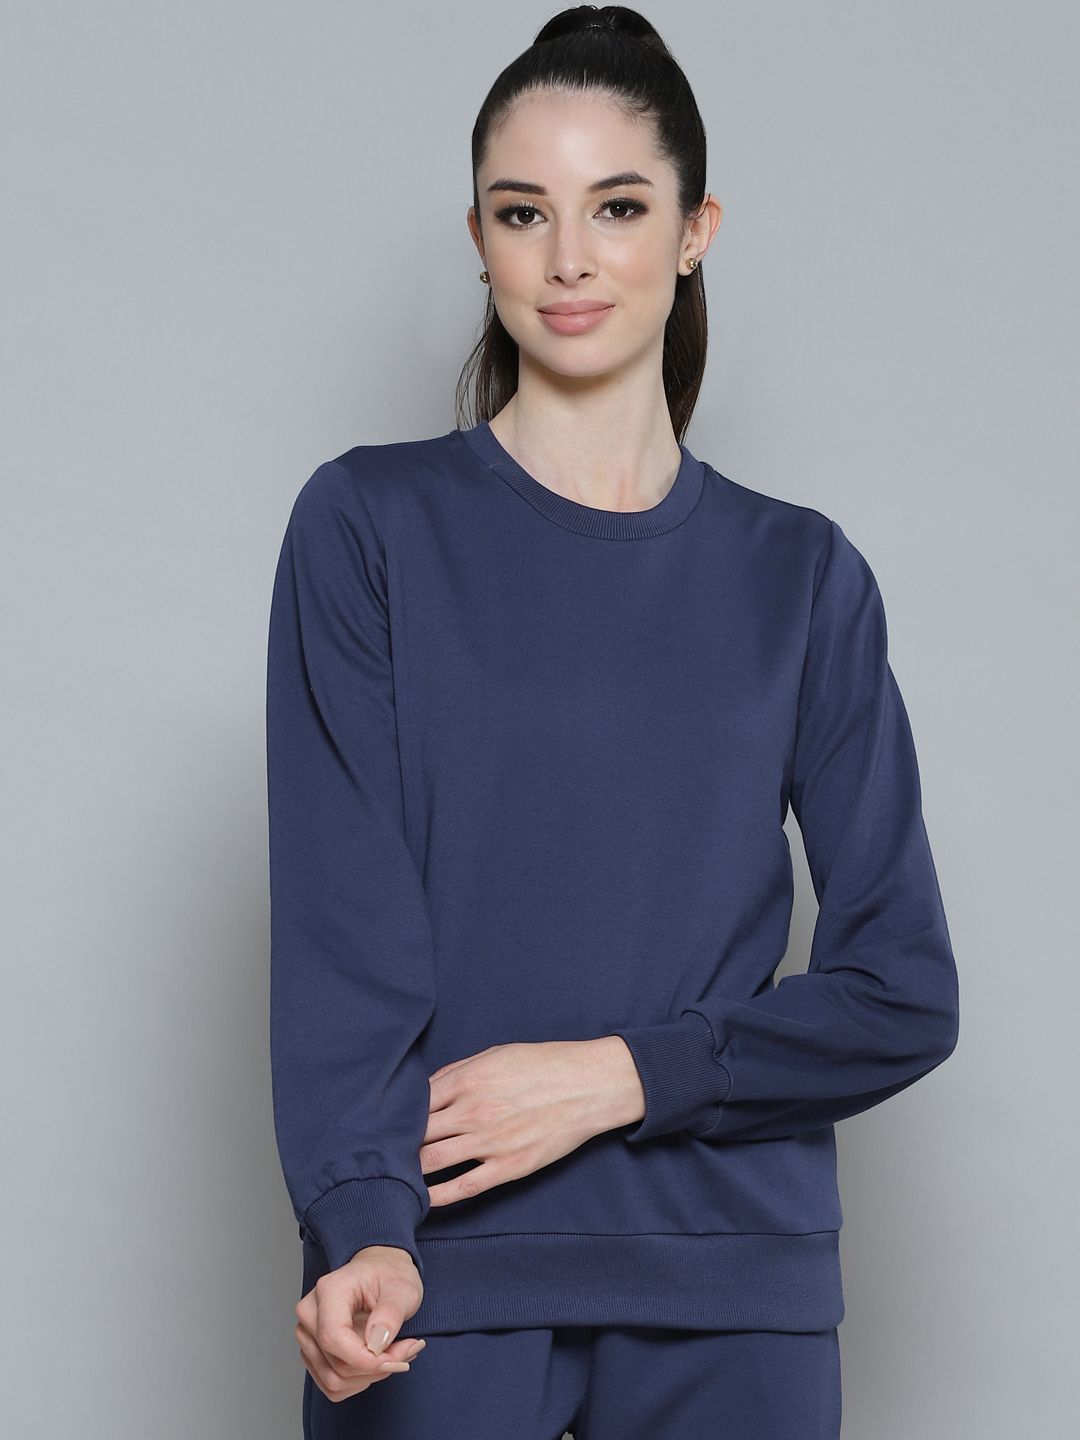 Femella Women Navy Blue Sweatshirt Price in India